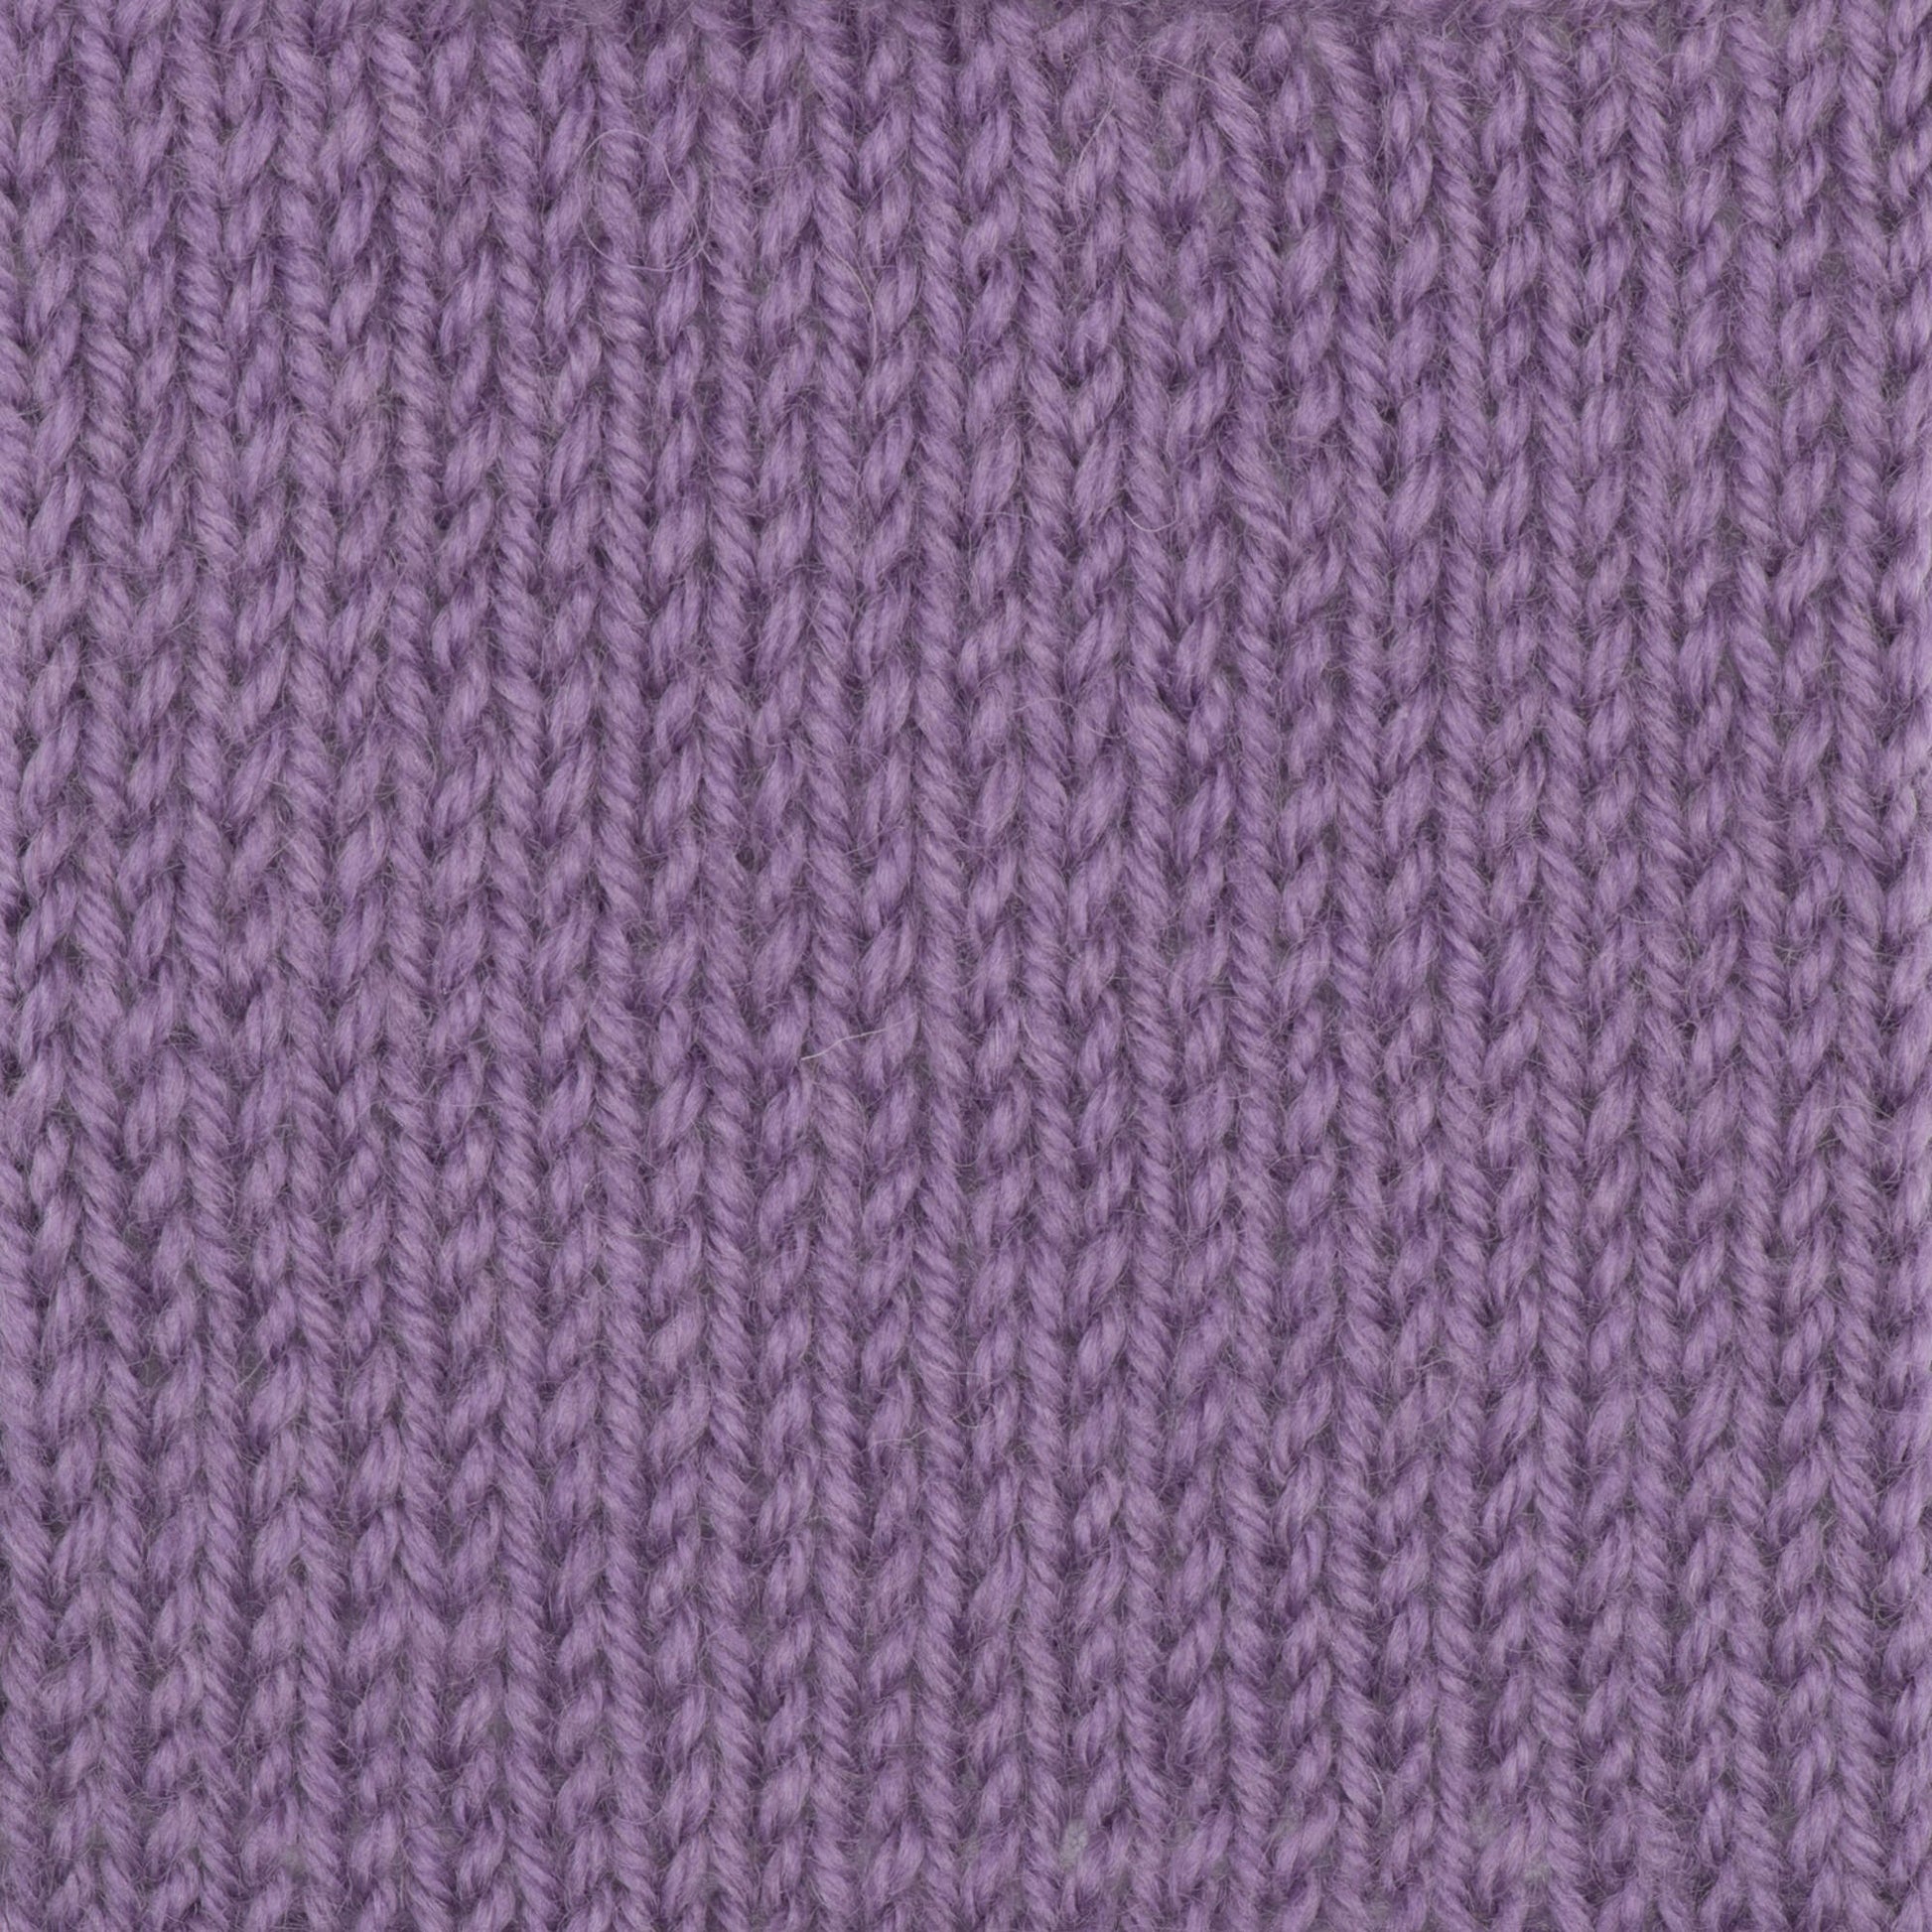 Patons Classic Wool DK Superwash Yarn - Discontinued Shades Wisteria